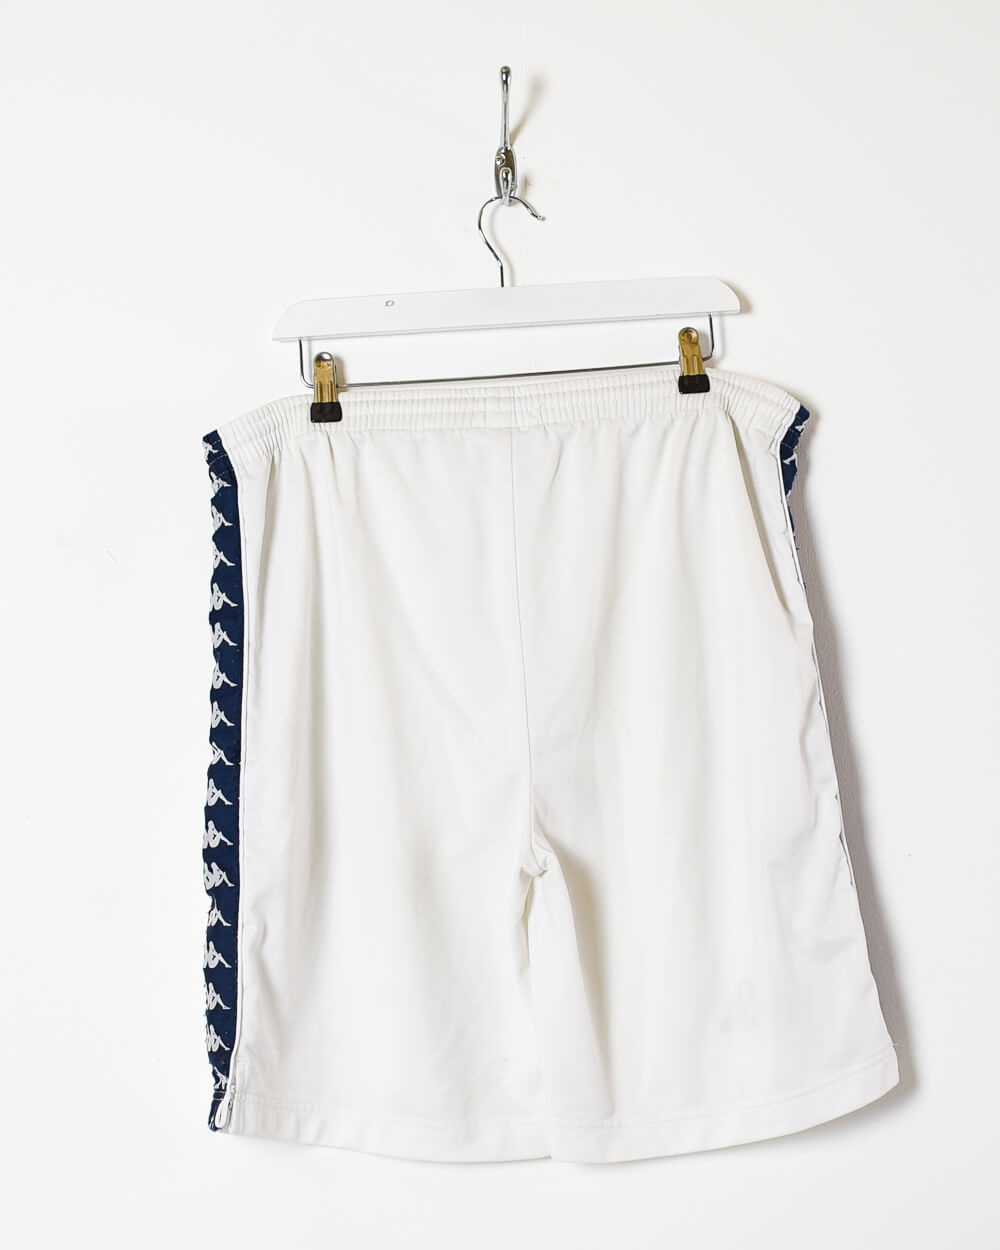 White Kappa Shorts - XX-Large